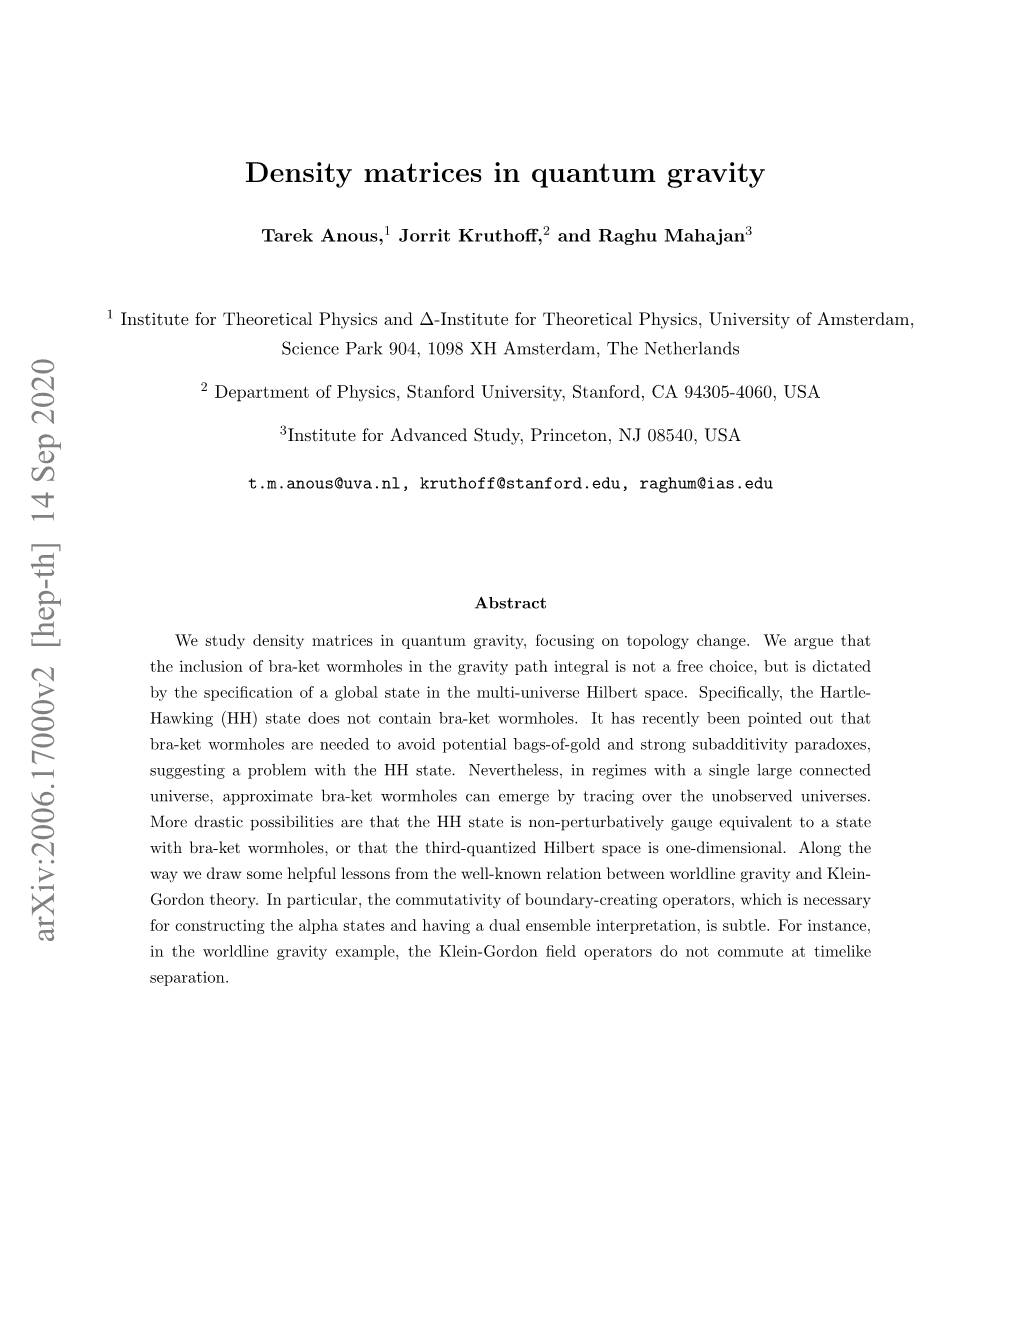 Arxiv:2006.17000V2 [Hep-Th] 14 Sep 2020 in the Worldline Gravity Example, the Klein-Gordon ﬁeld Operators Do Not Commute at Timelike Separation